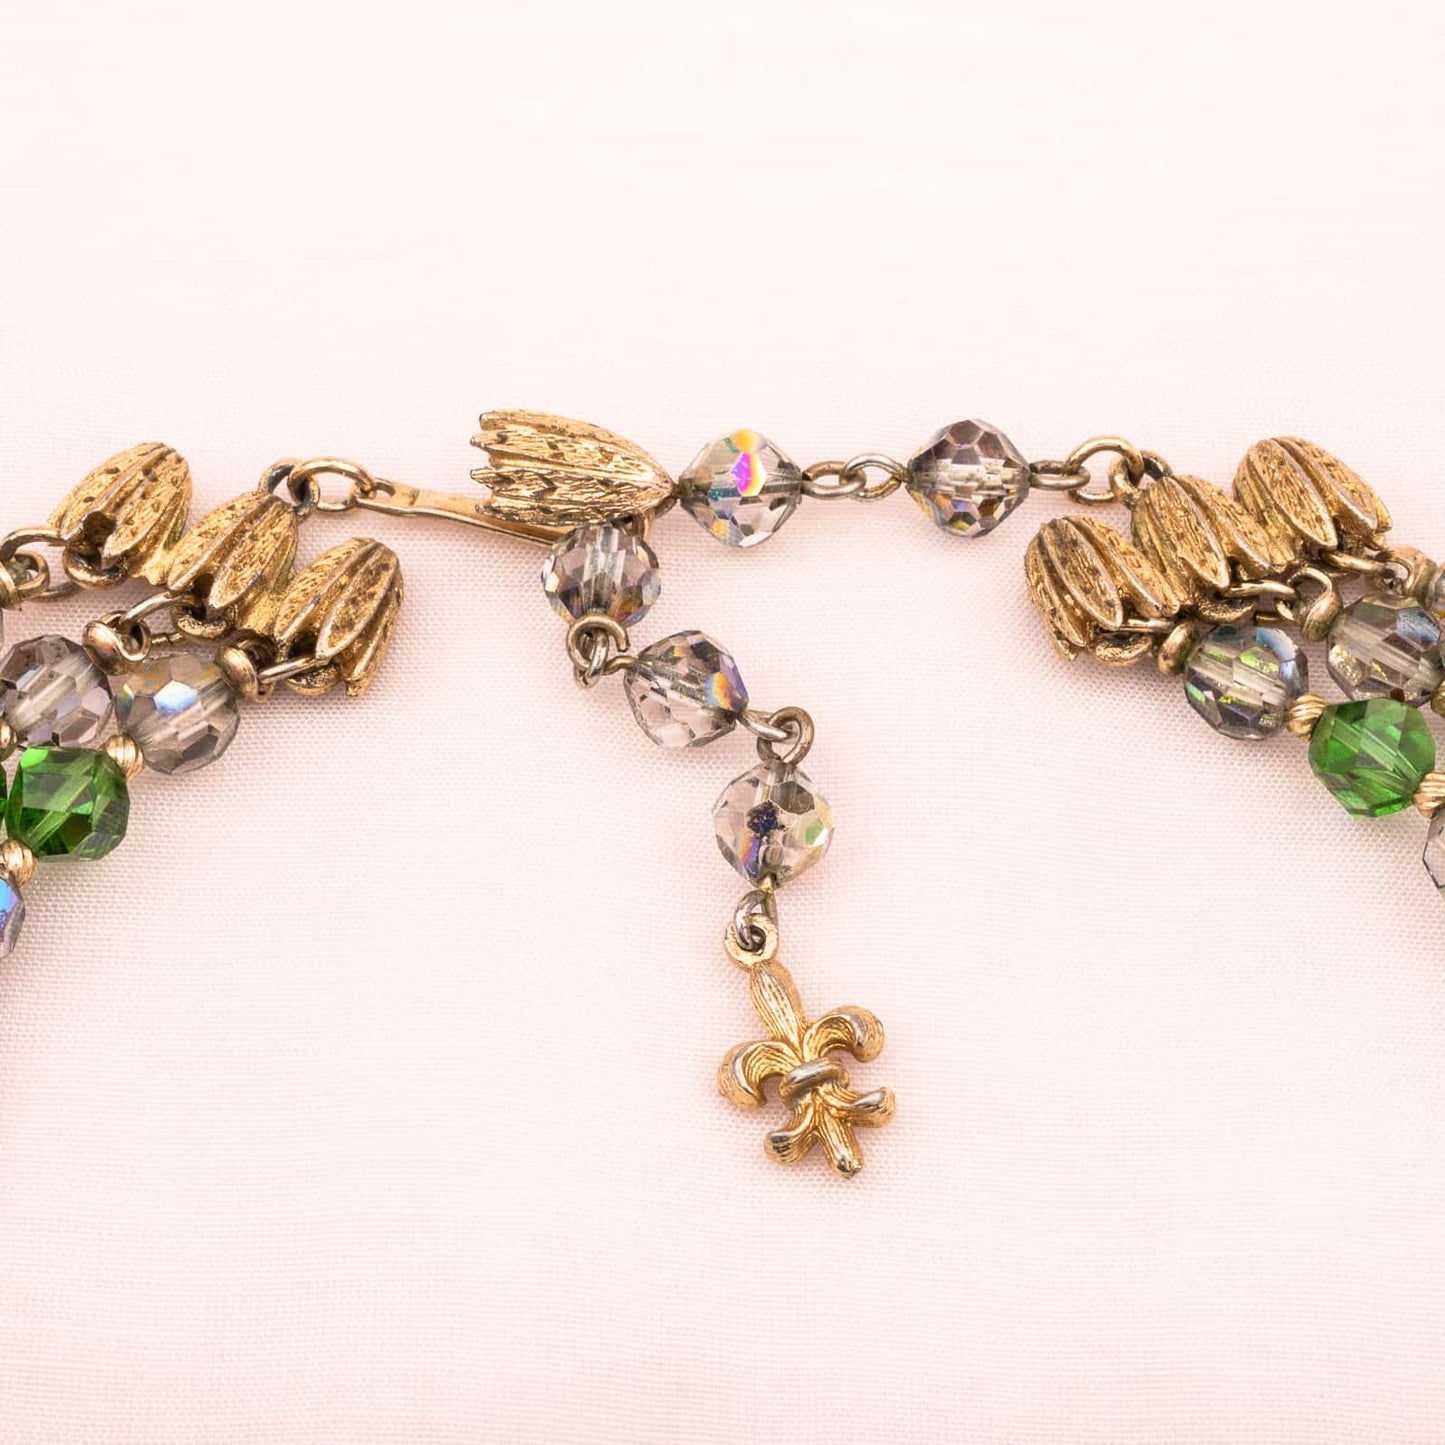 Vendome dreireihige Halskette mit grünen Kristall Perlen Verschluss Fleur de lis